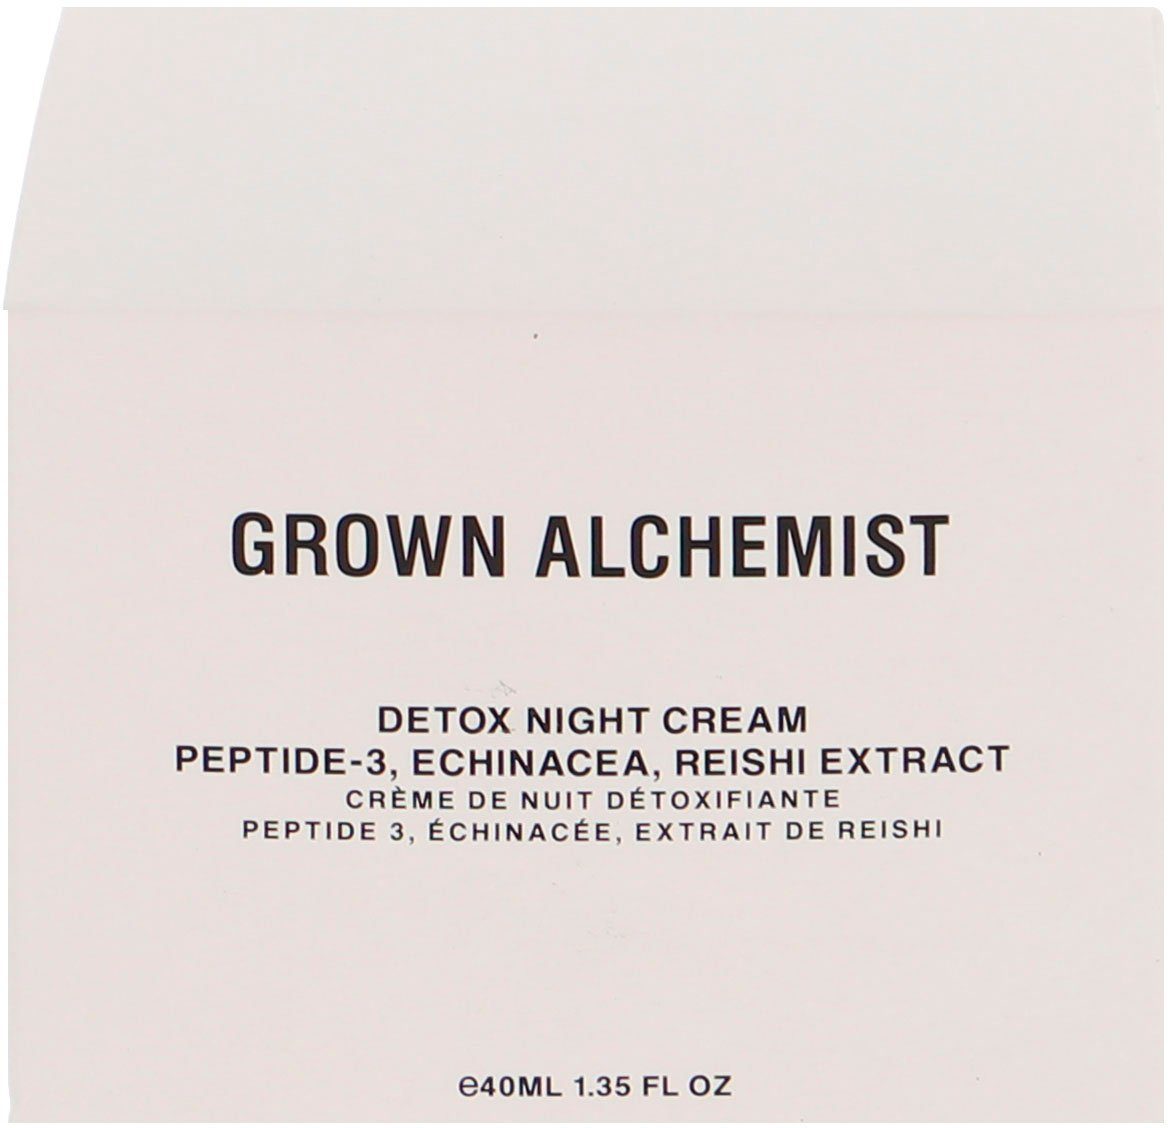 Extract Echinacea, Nachtcreme Night GROWN Reishi Cream, Peptide-3, ALCHEMIST Detox